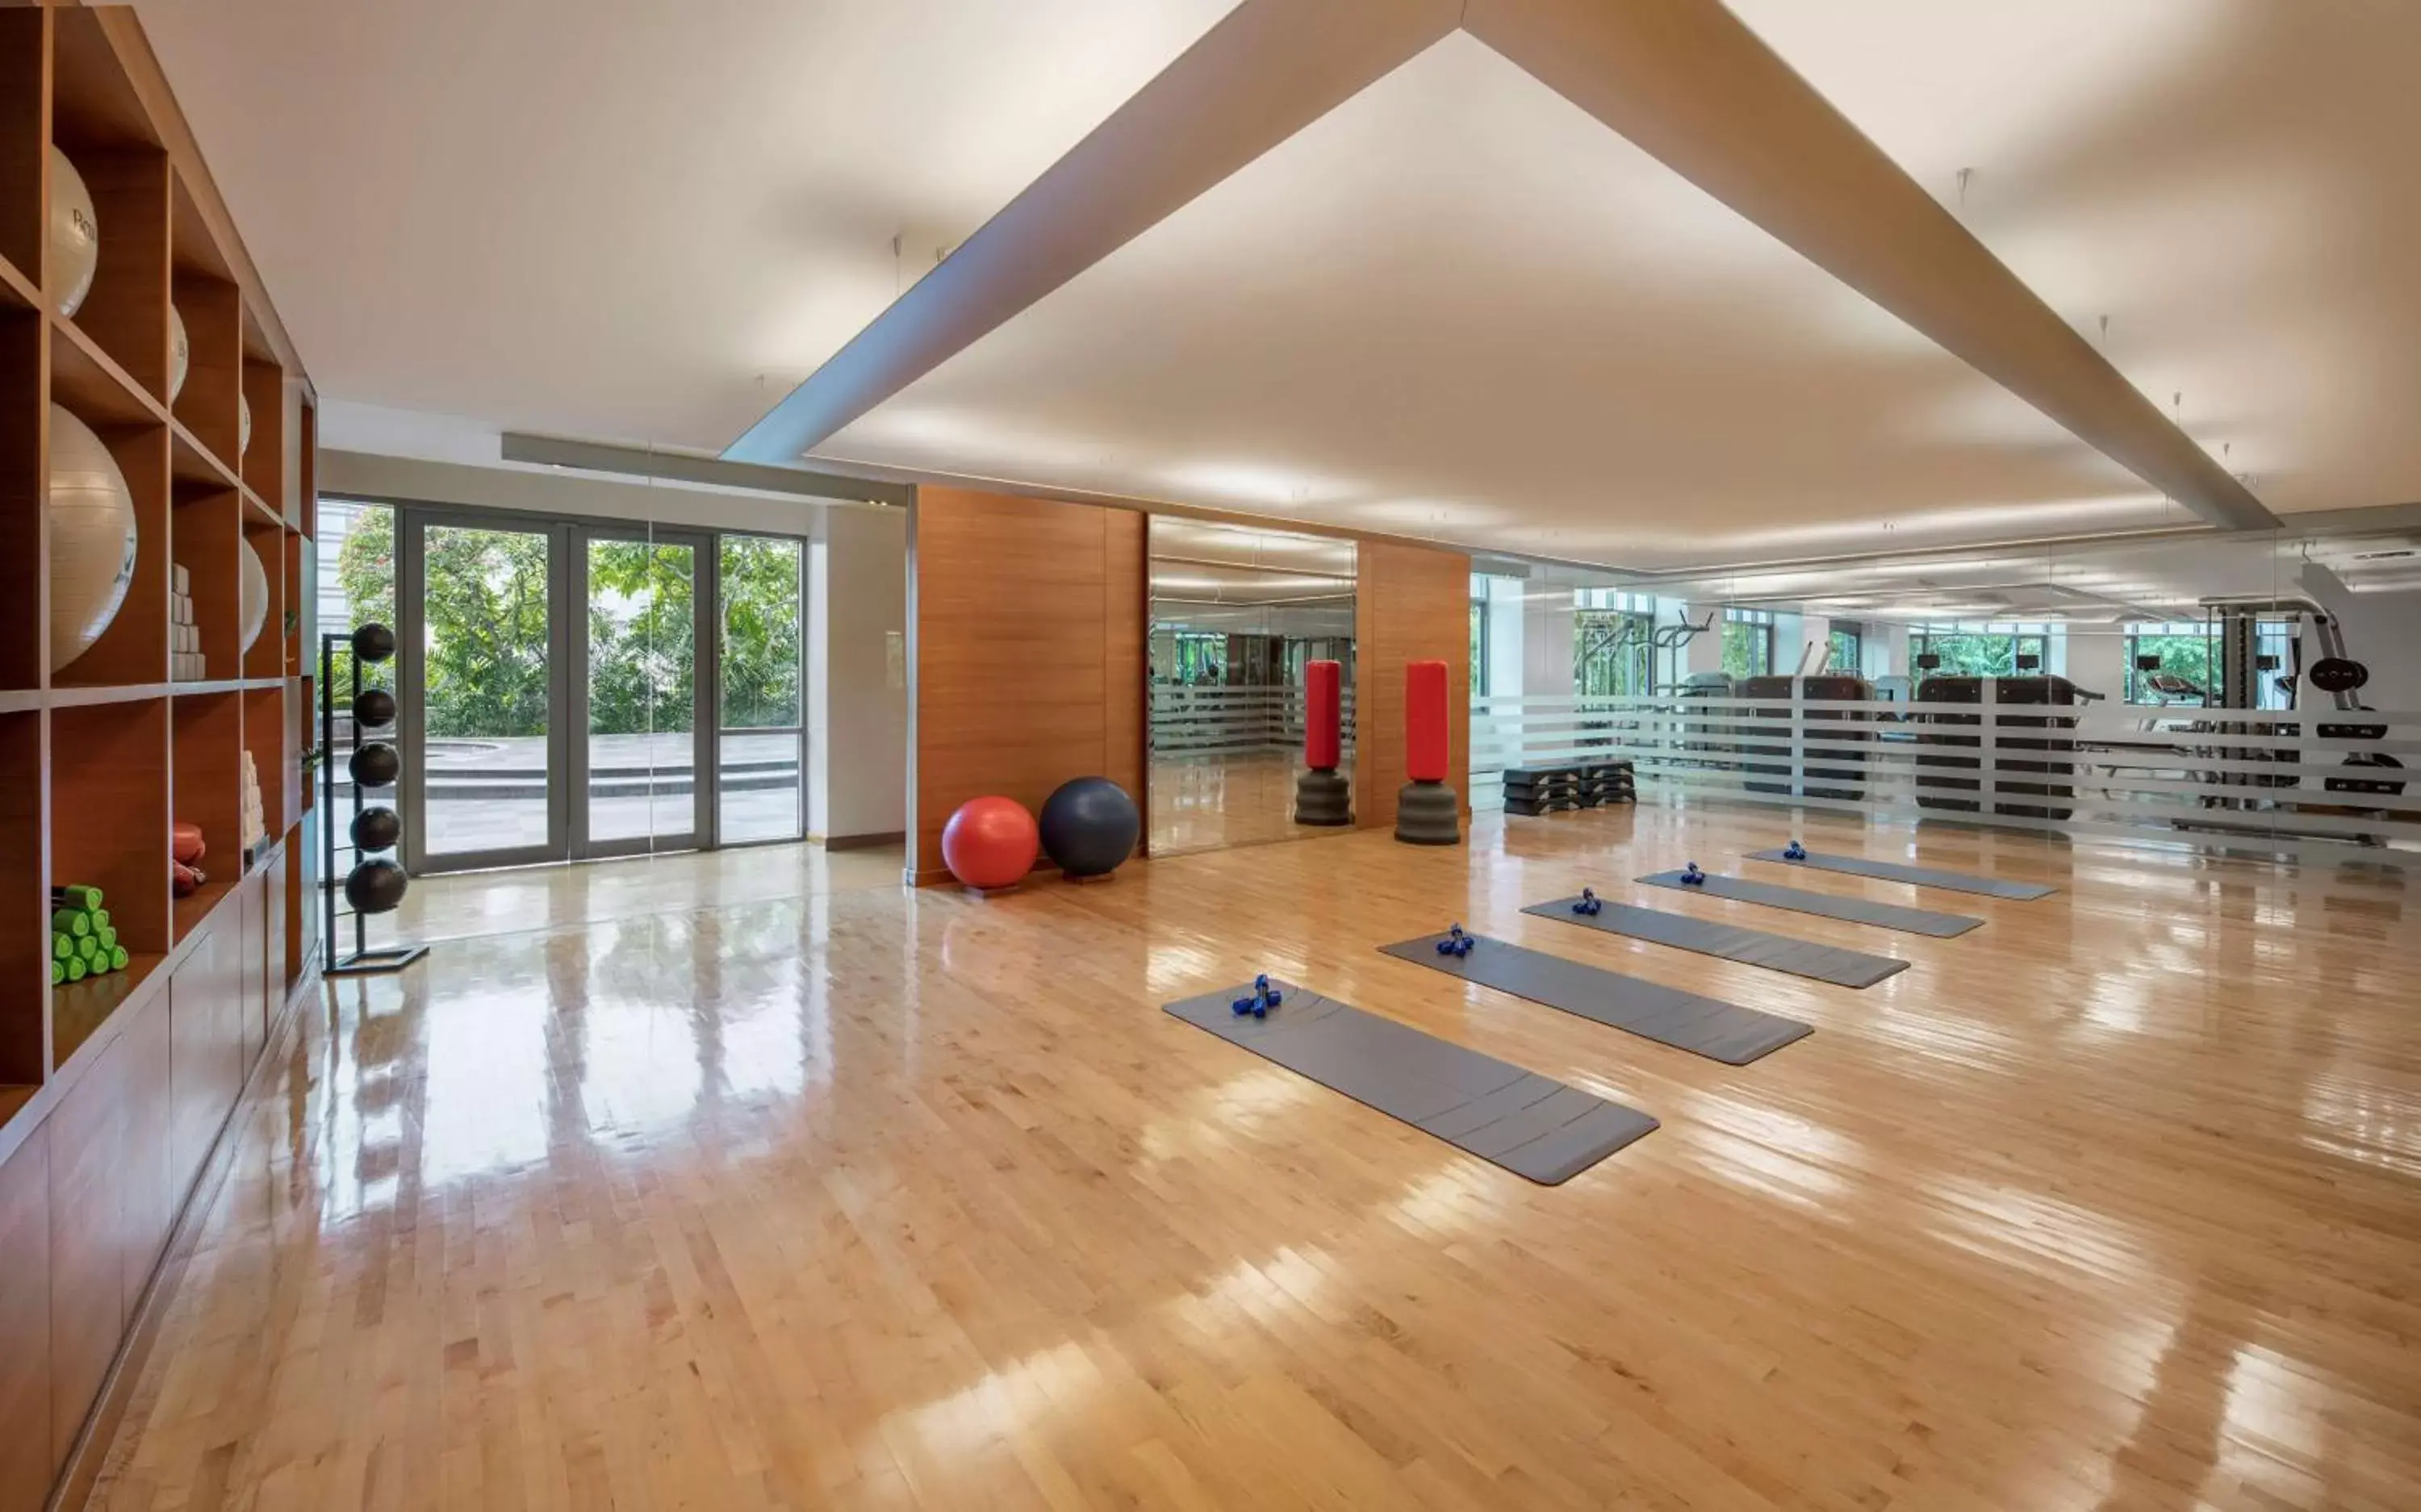 Fitness centre/facilities, Fitness Center/Facilities in Conrad Bangkok Residences